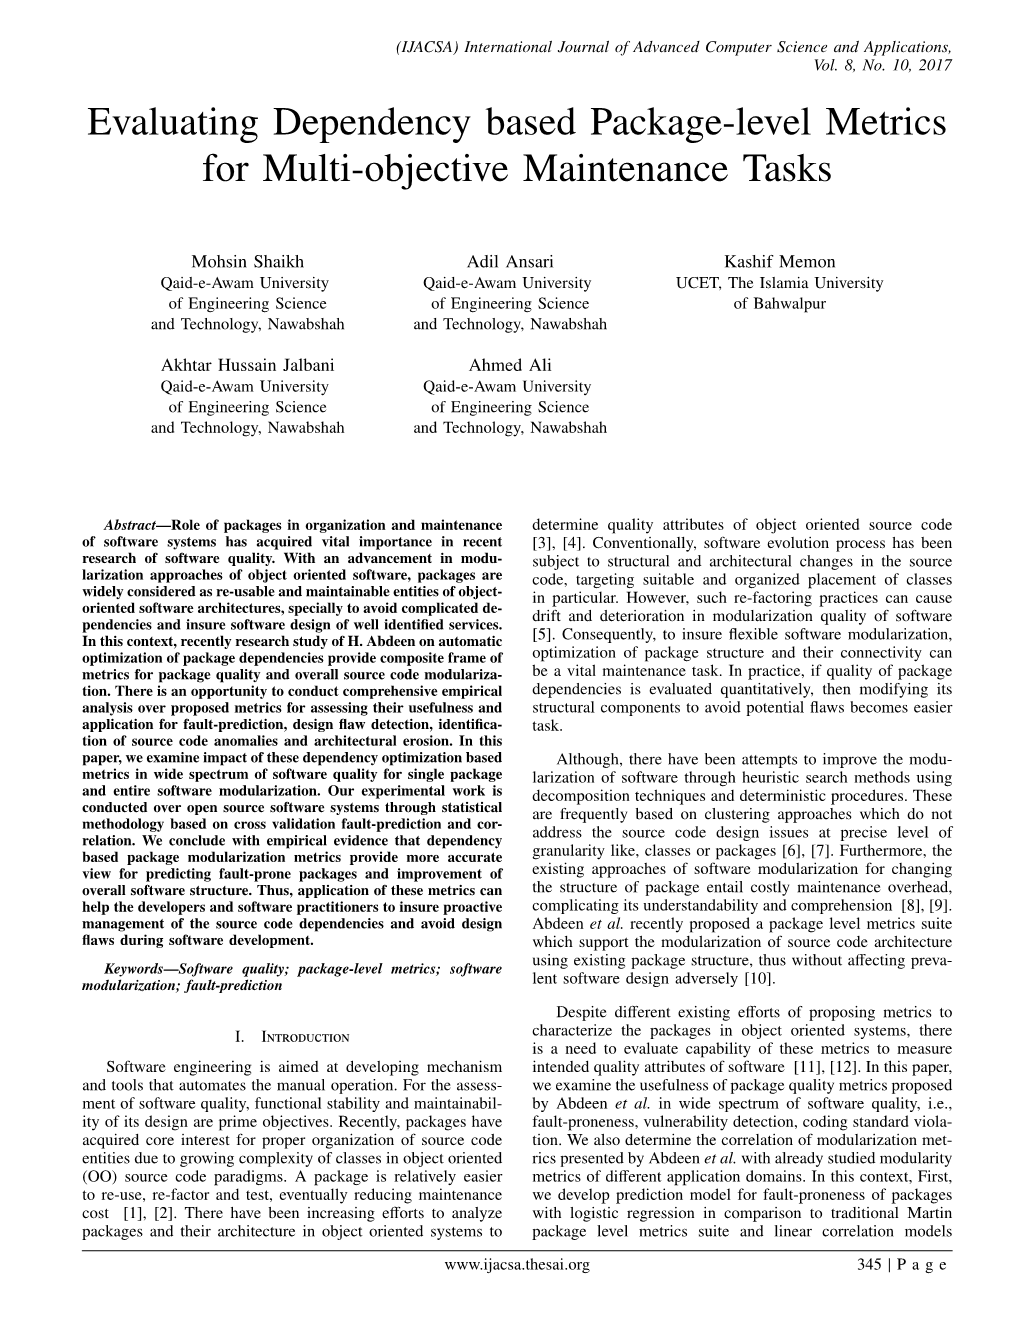 Evaluating Dependency Based Package-Level Metrics for Multi-Objective Maintenance Tasks